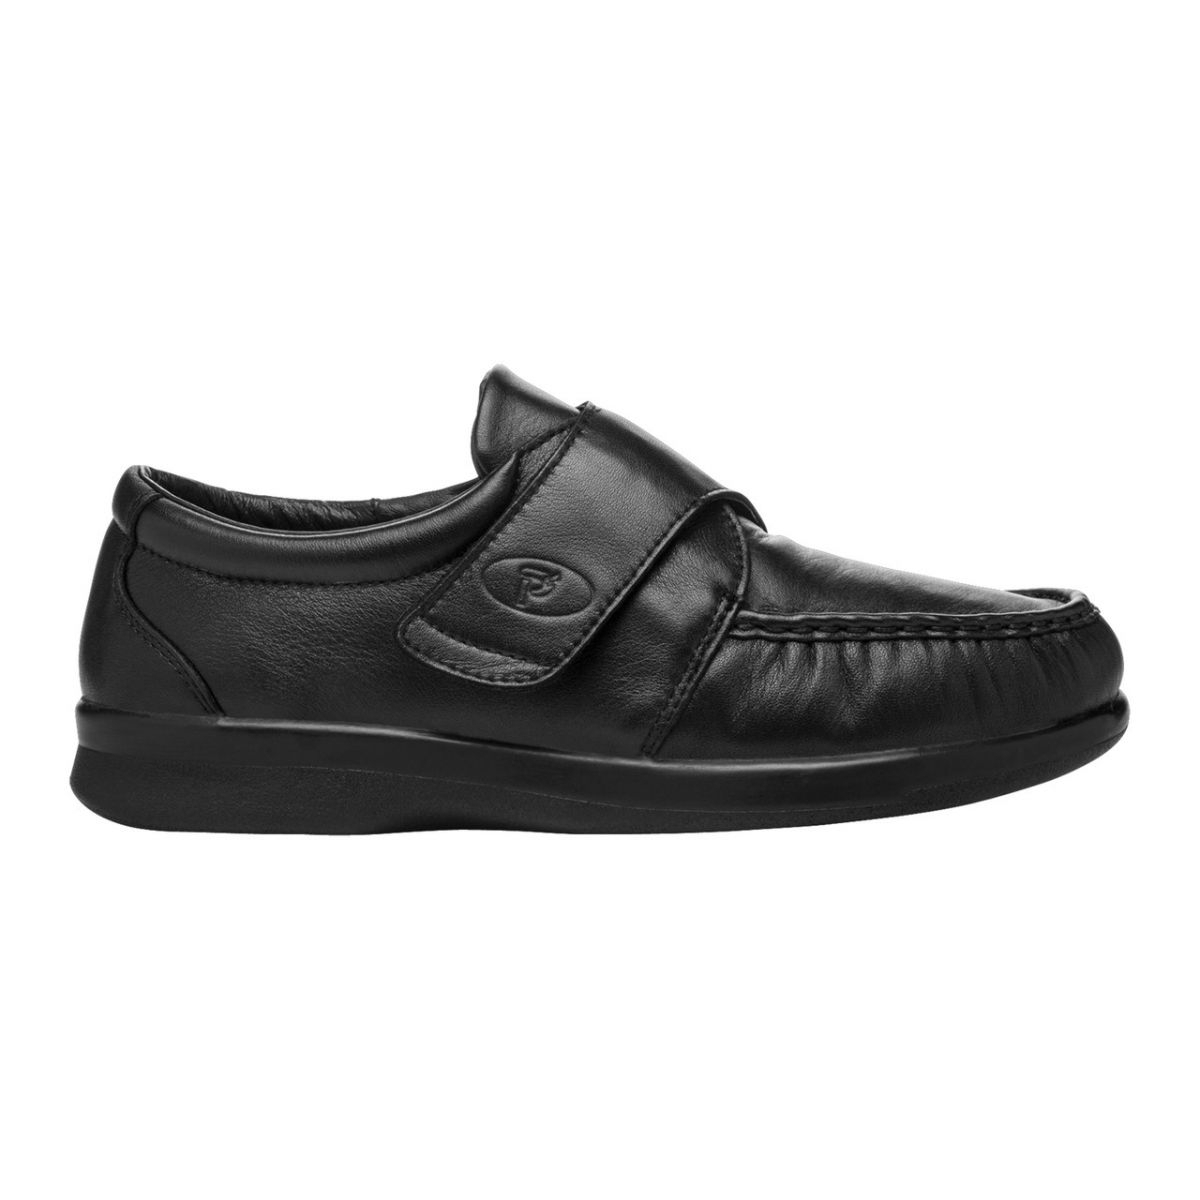 Propet Men's Pucker Moc Strap Shoe Black - M3925B BLACK - BLACK, 12-D